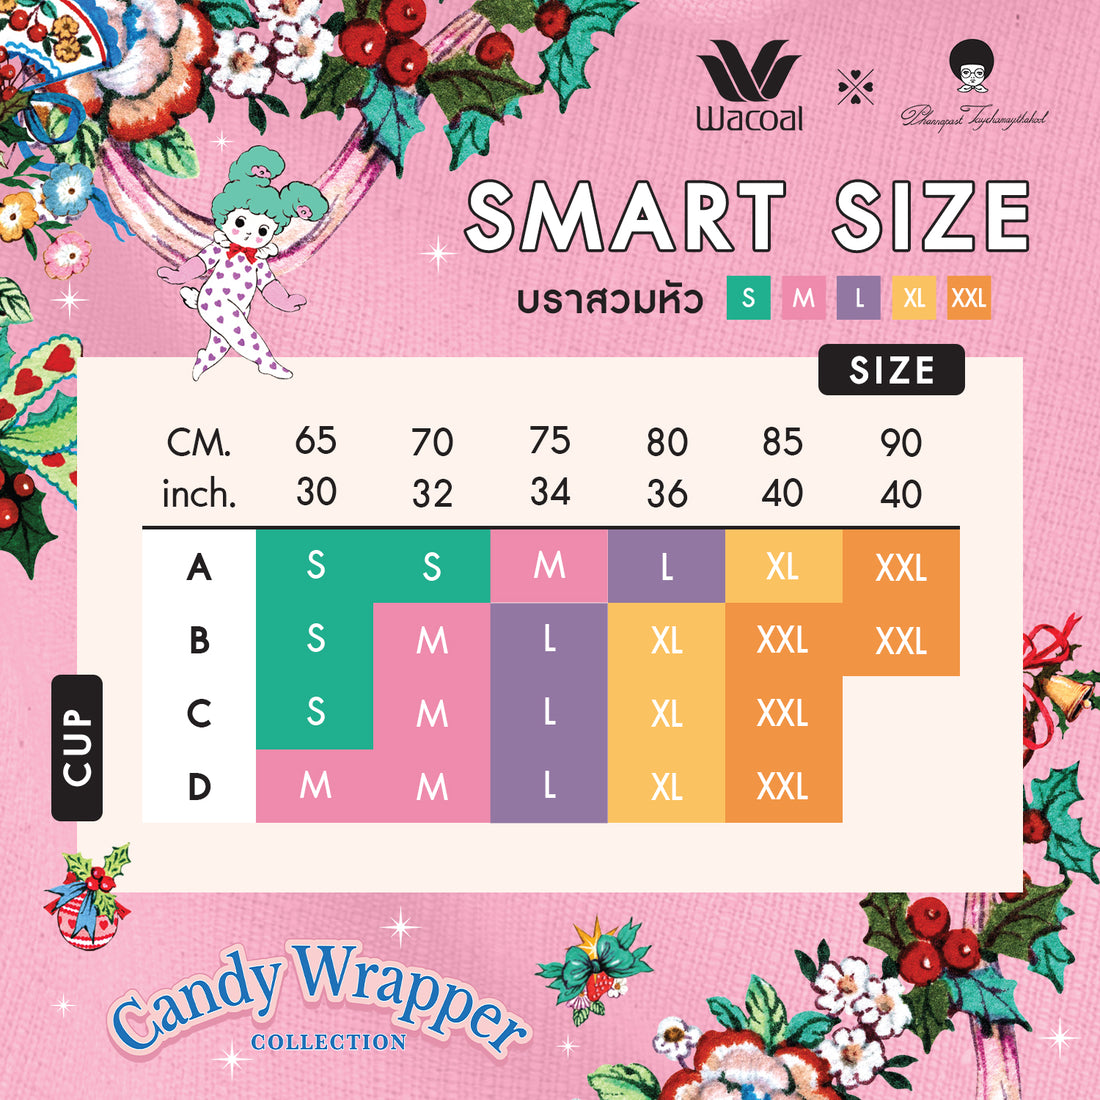 Wacoal x Phannapast: “Candy Wrappers Collection”  บังทรงสวมหัวพิมพ์ลาย Ranibow Sue รุ่น WH4N06 สีเบจ (BE)